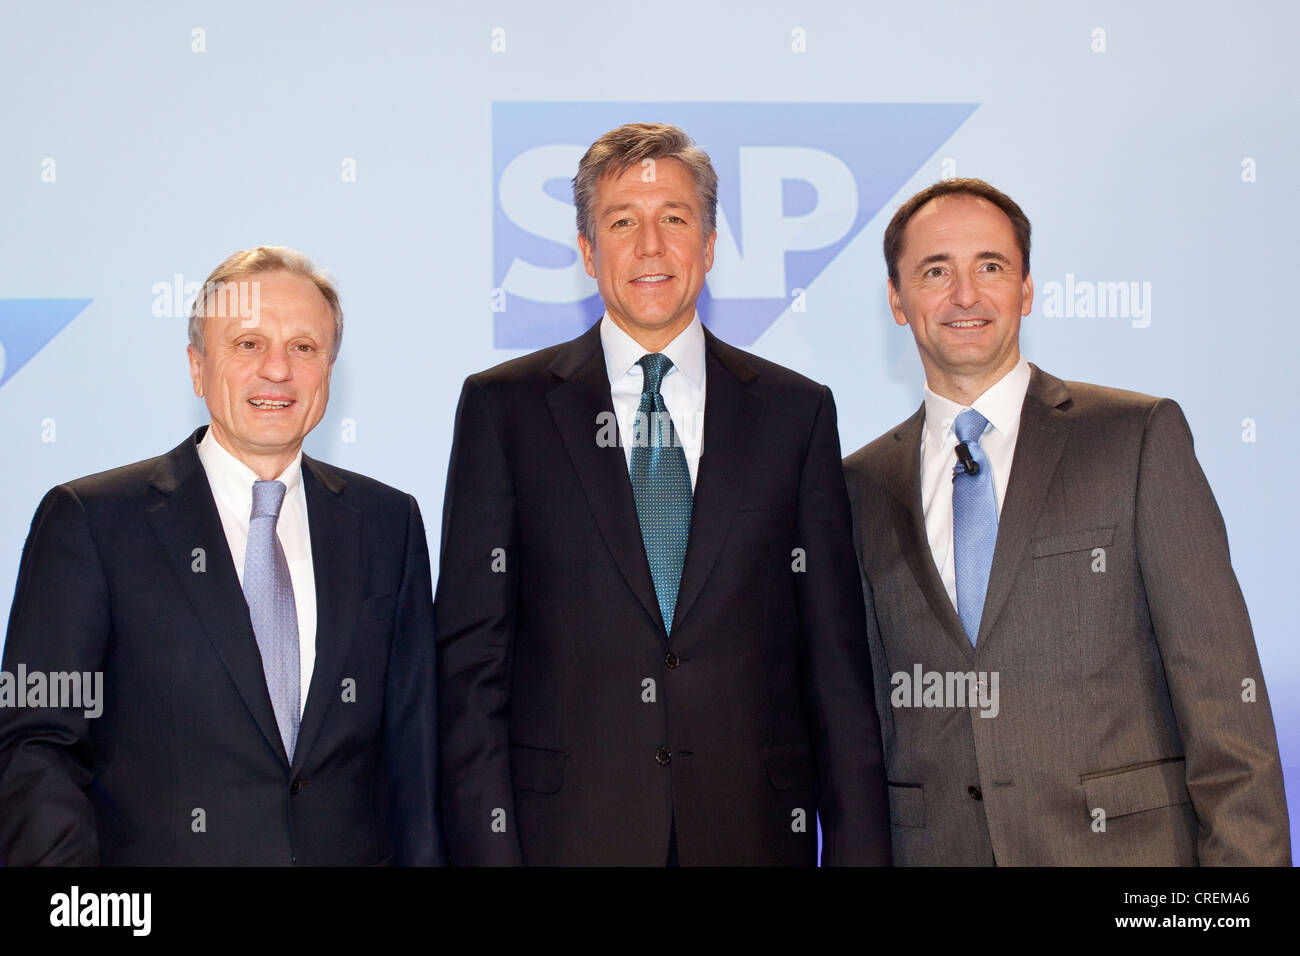 Werner Brandt, left, CFO of SAP AG, Bill McDermott, centre, co-CEO of SAP AG and Jim Hagemann Snabe, right, co-CEO of SAP AG, Stock Photo